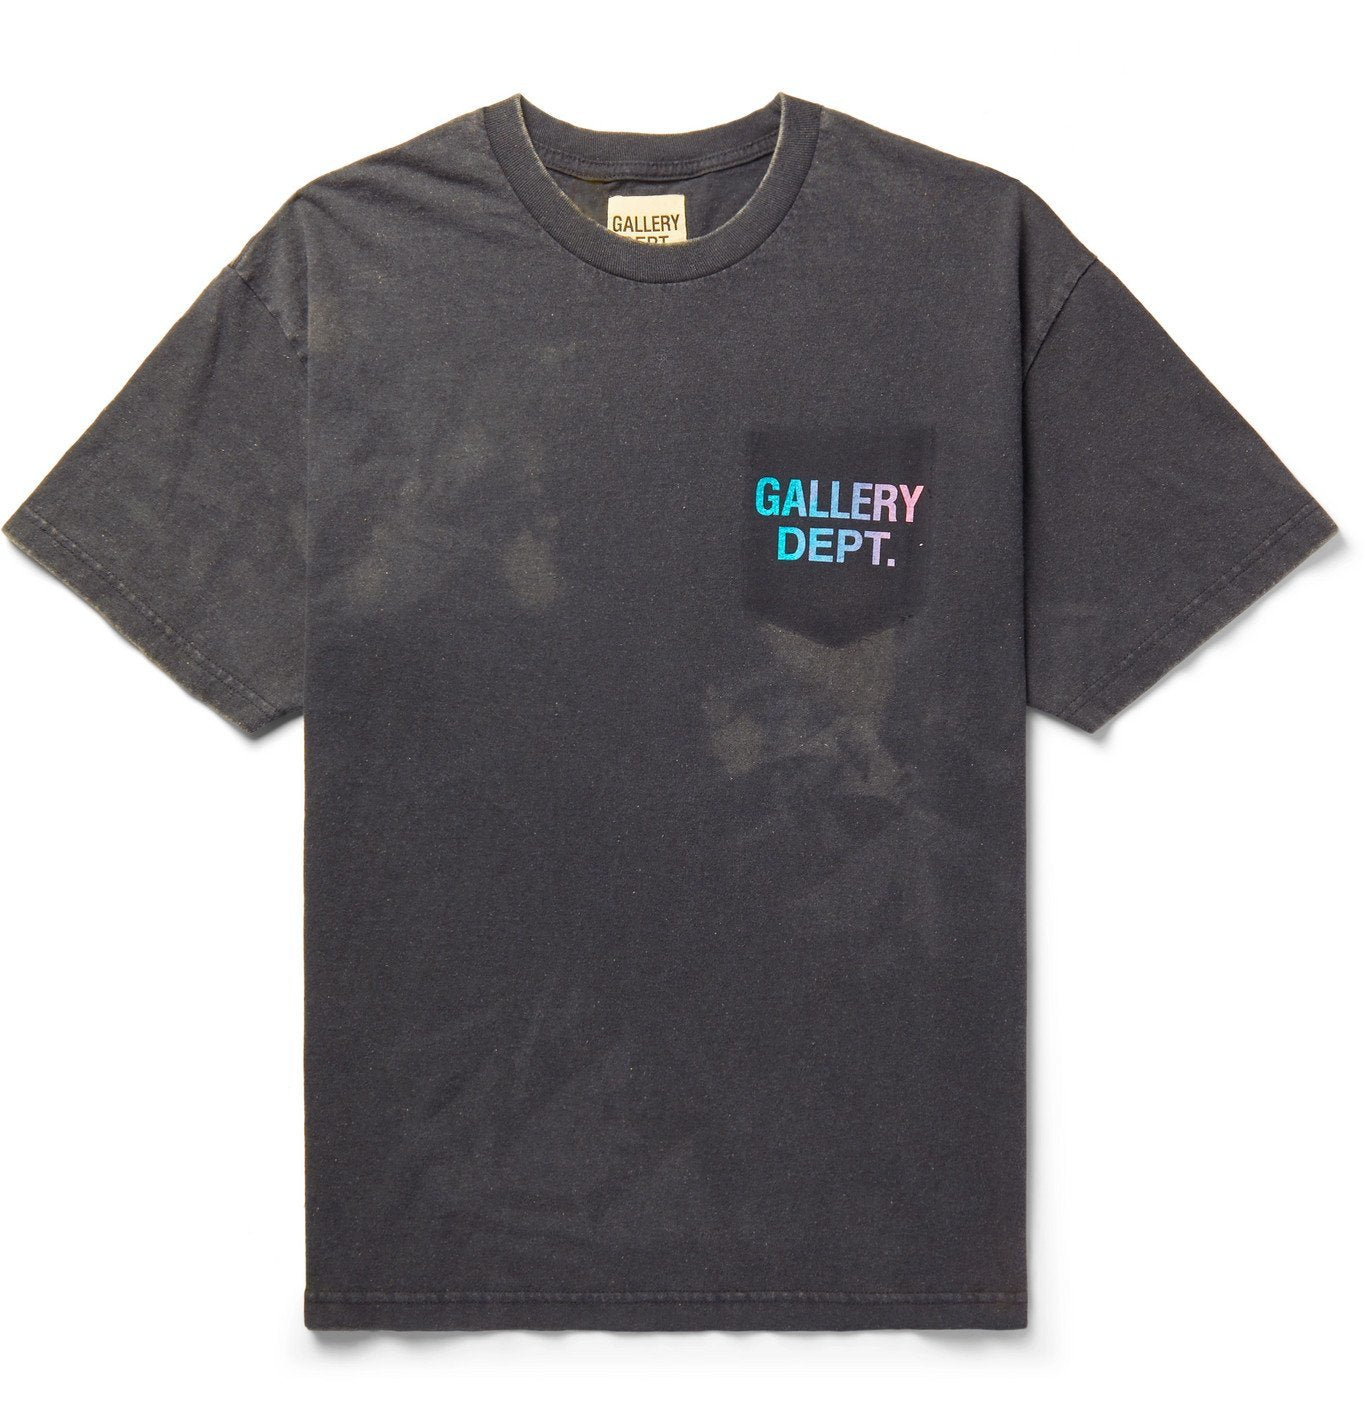 Gallery Dept. Miami Boardwalk Vintage T-Shirt Black